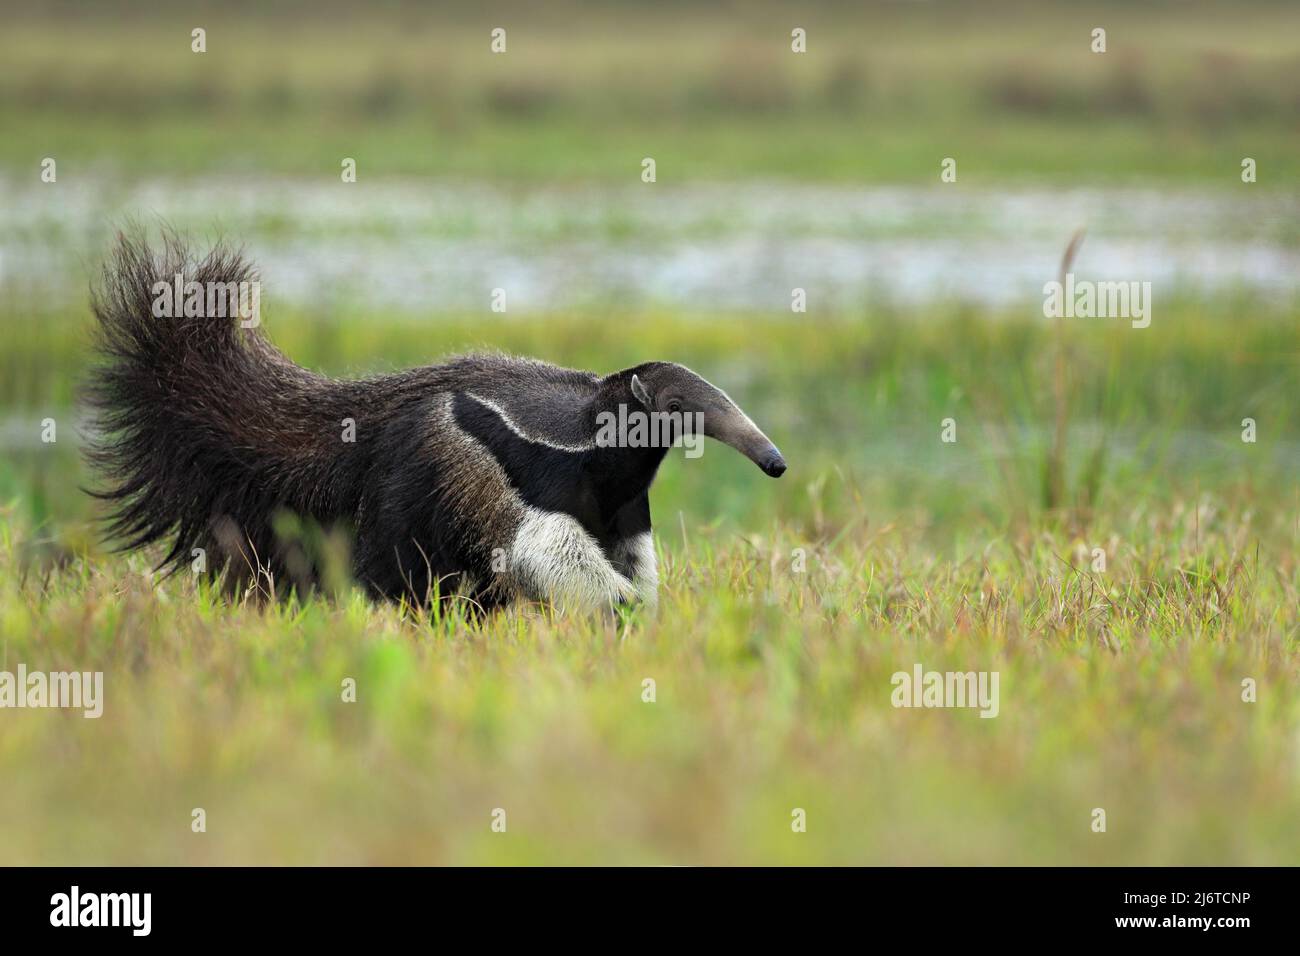 Running Giant Anteater, Myrmecophaga tridactyla, animal with long tail ane log nose, Pantanal, Brazil Stock Photo